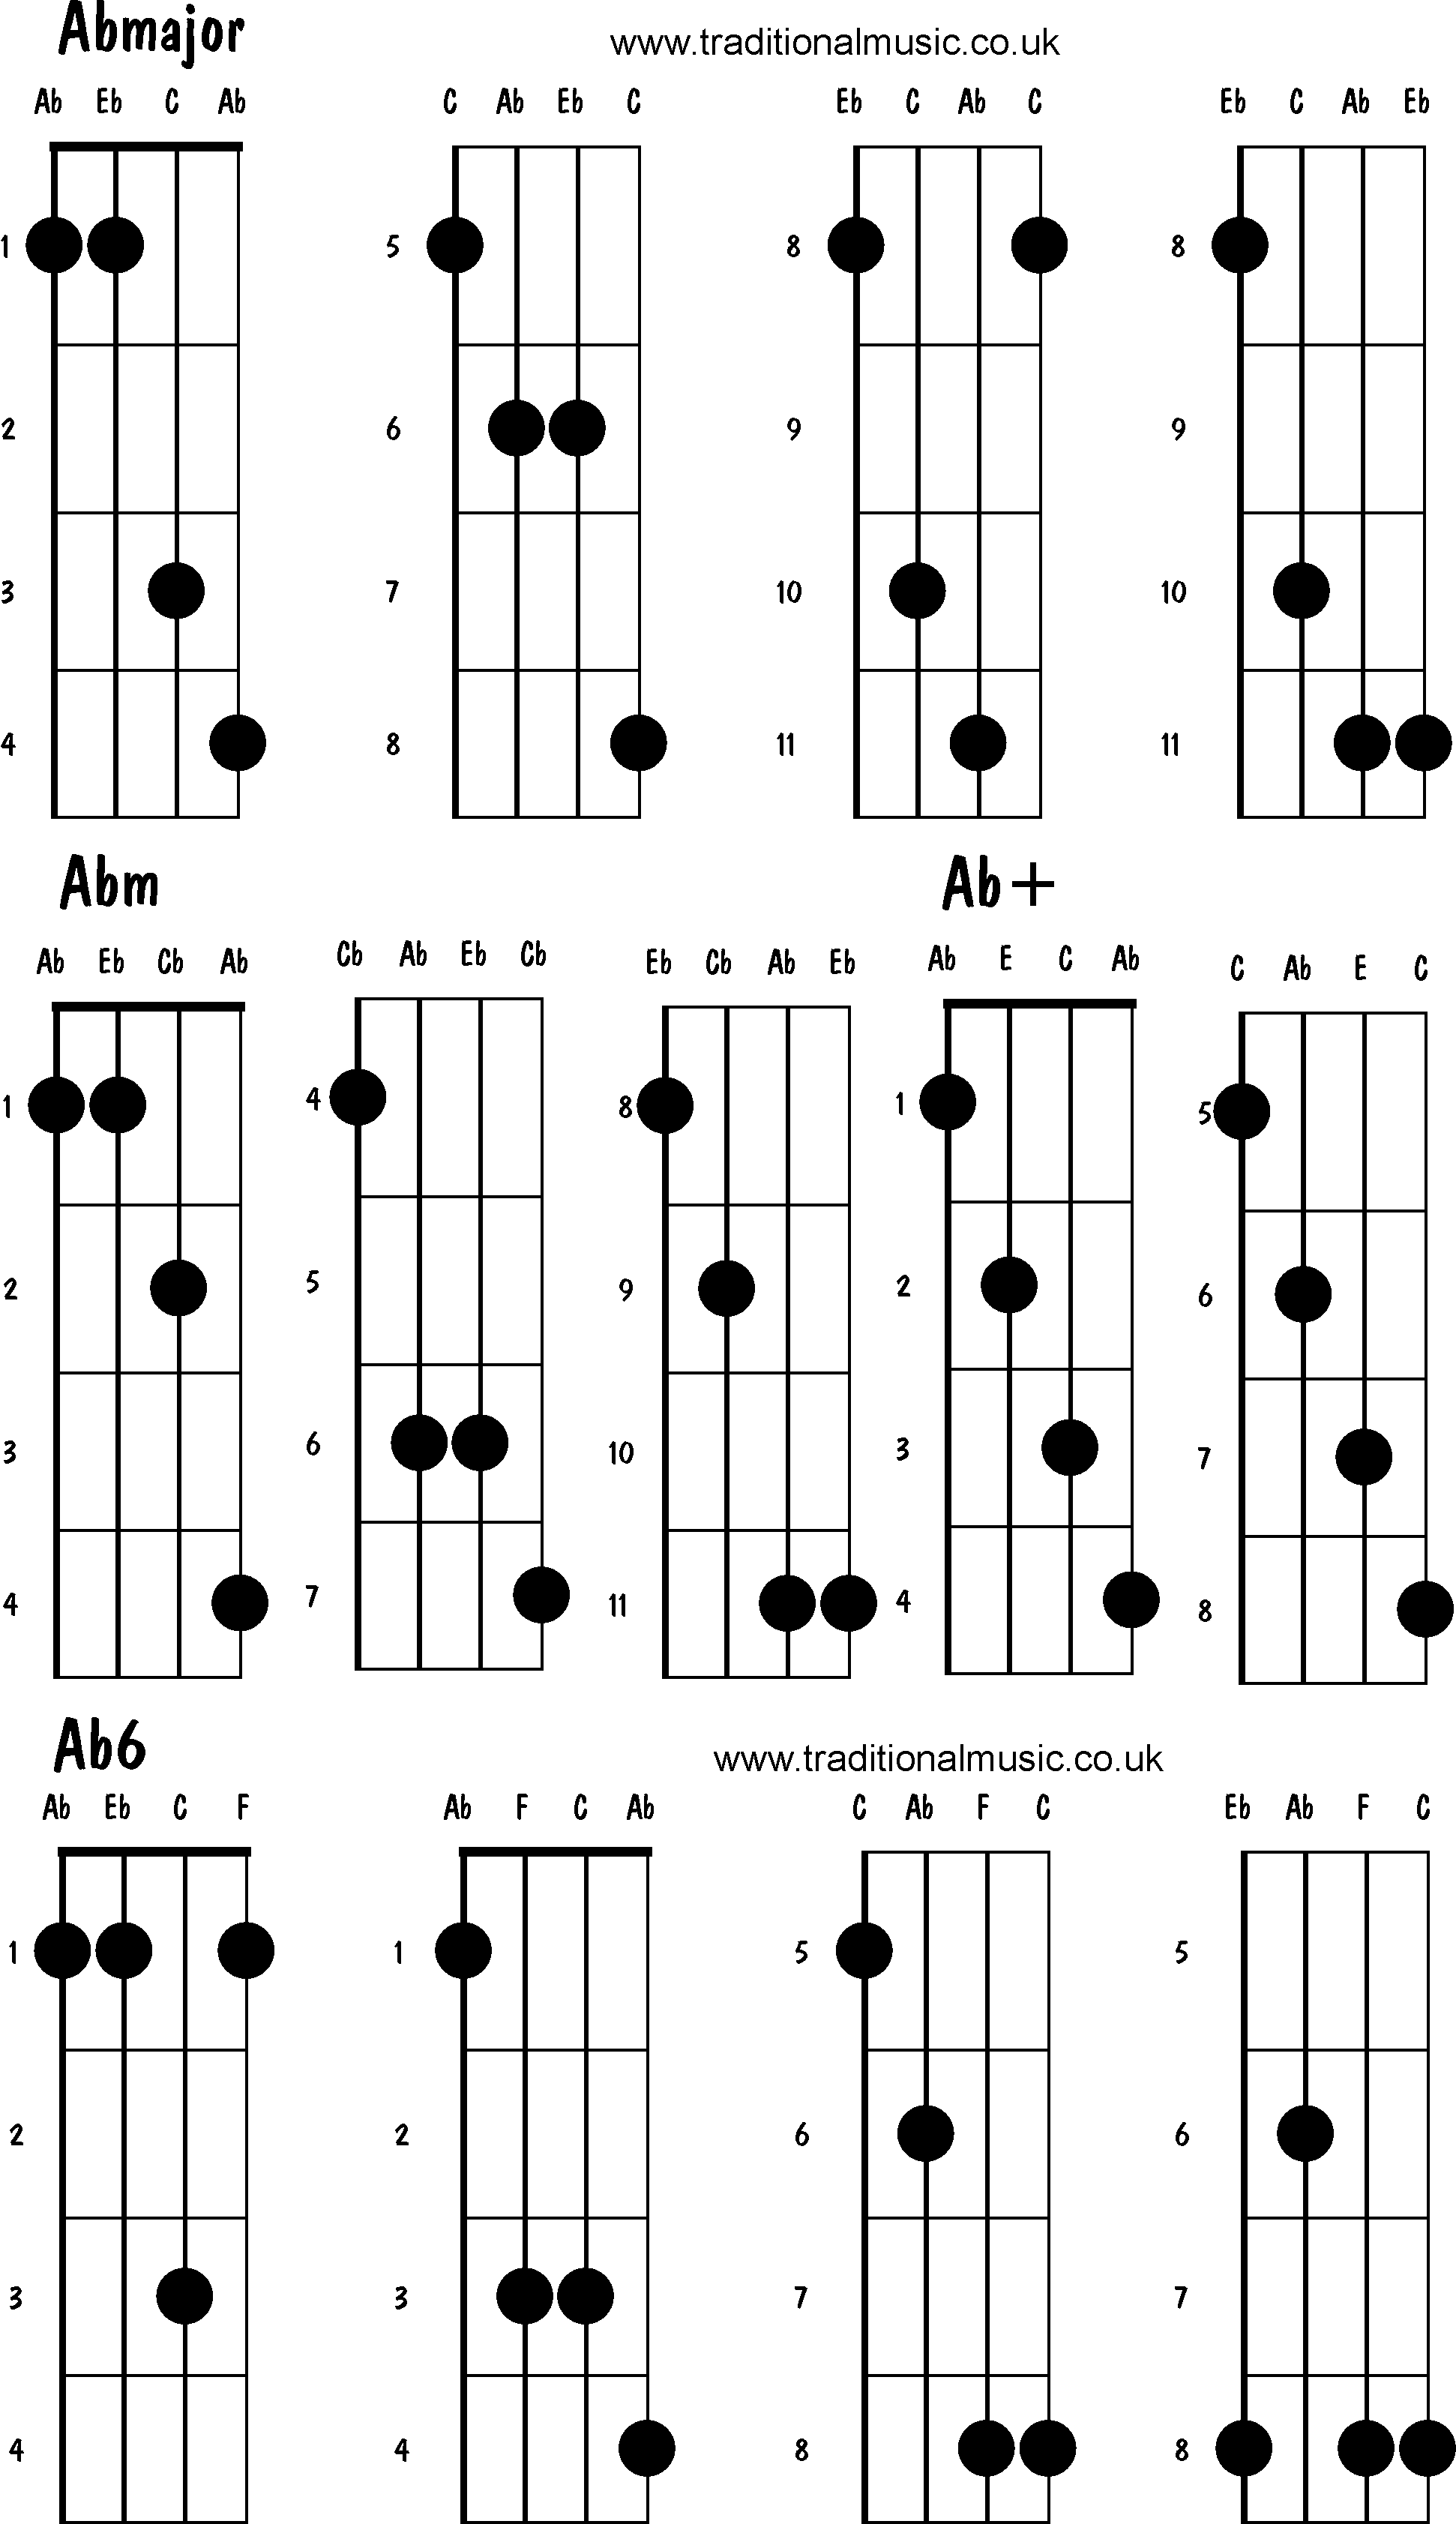 Advanced mandolin chords:Abmajor, Abm, Ab+, Ab6